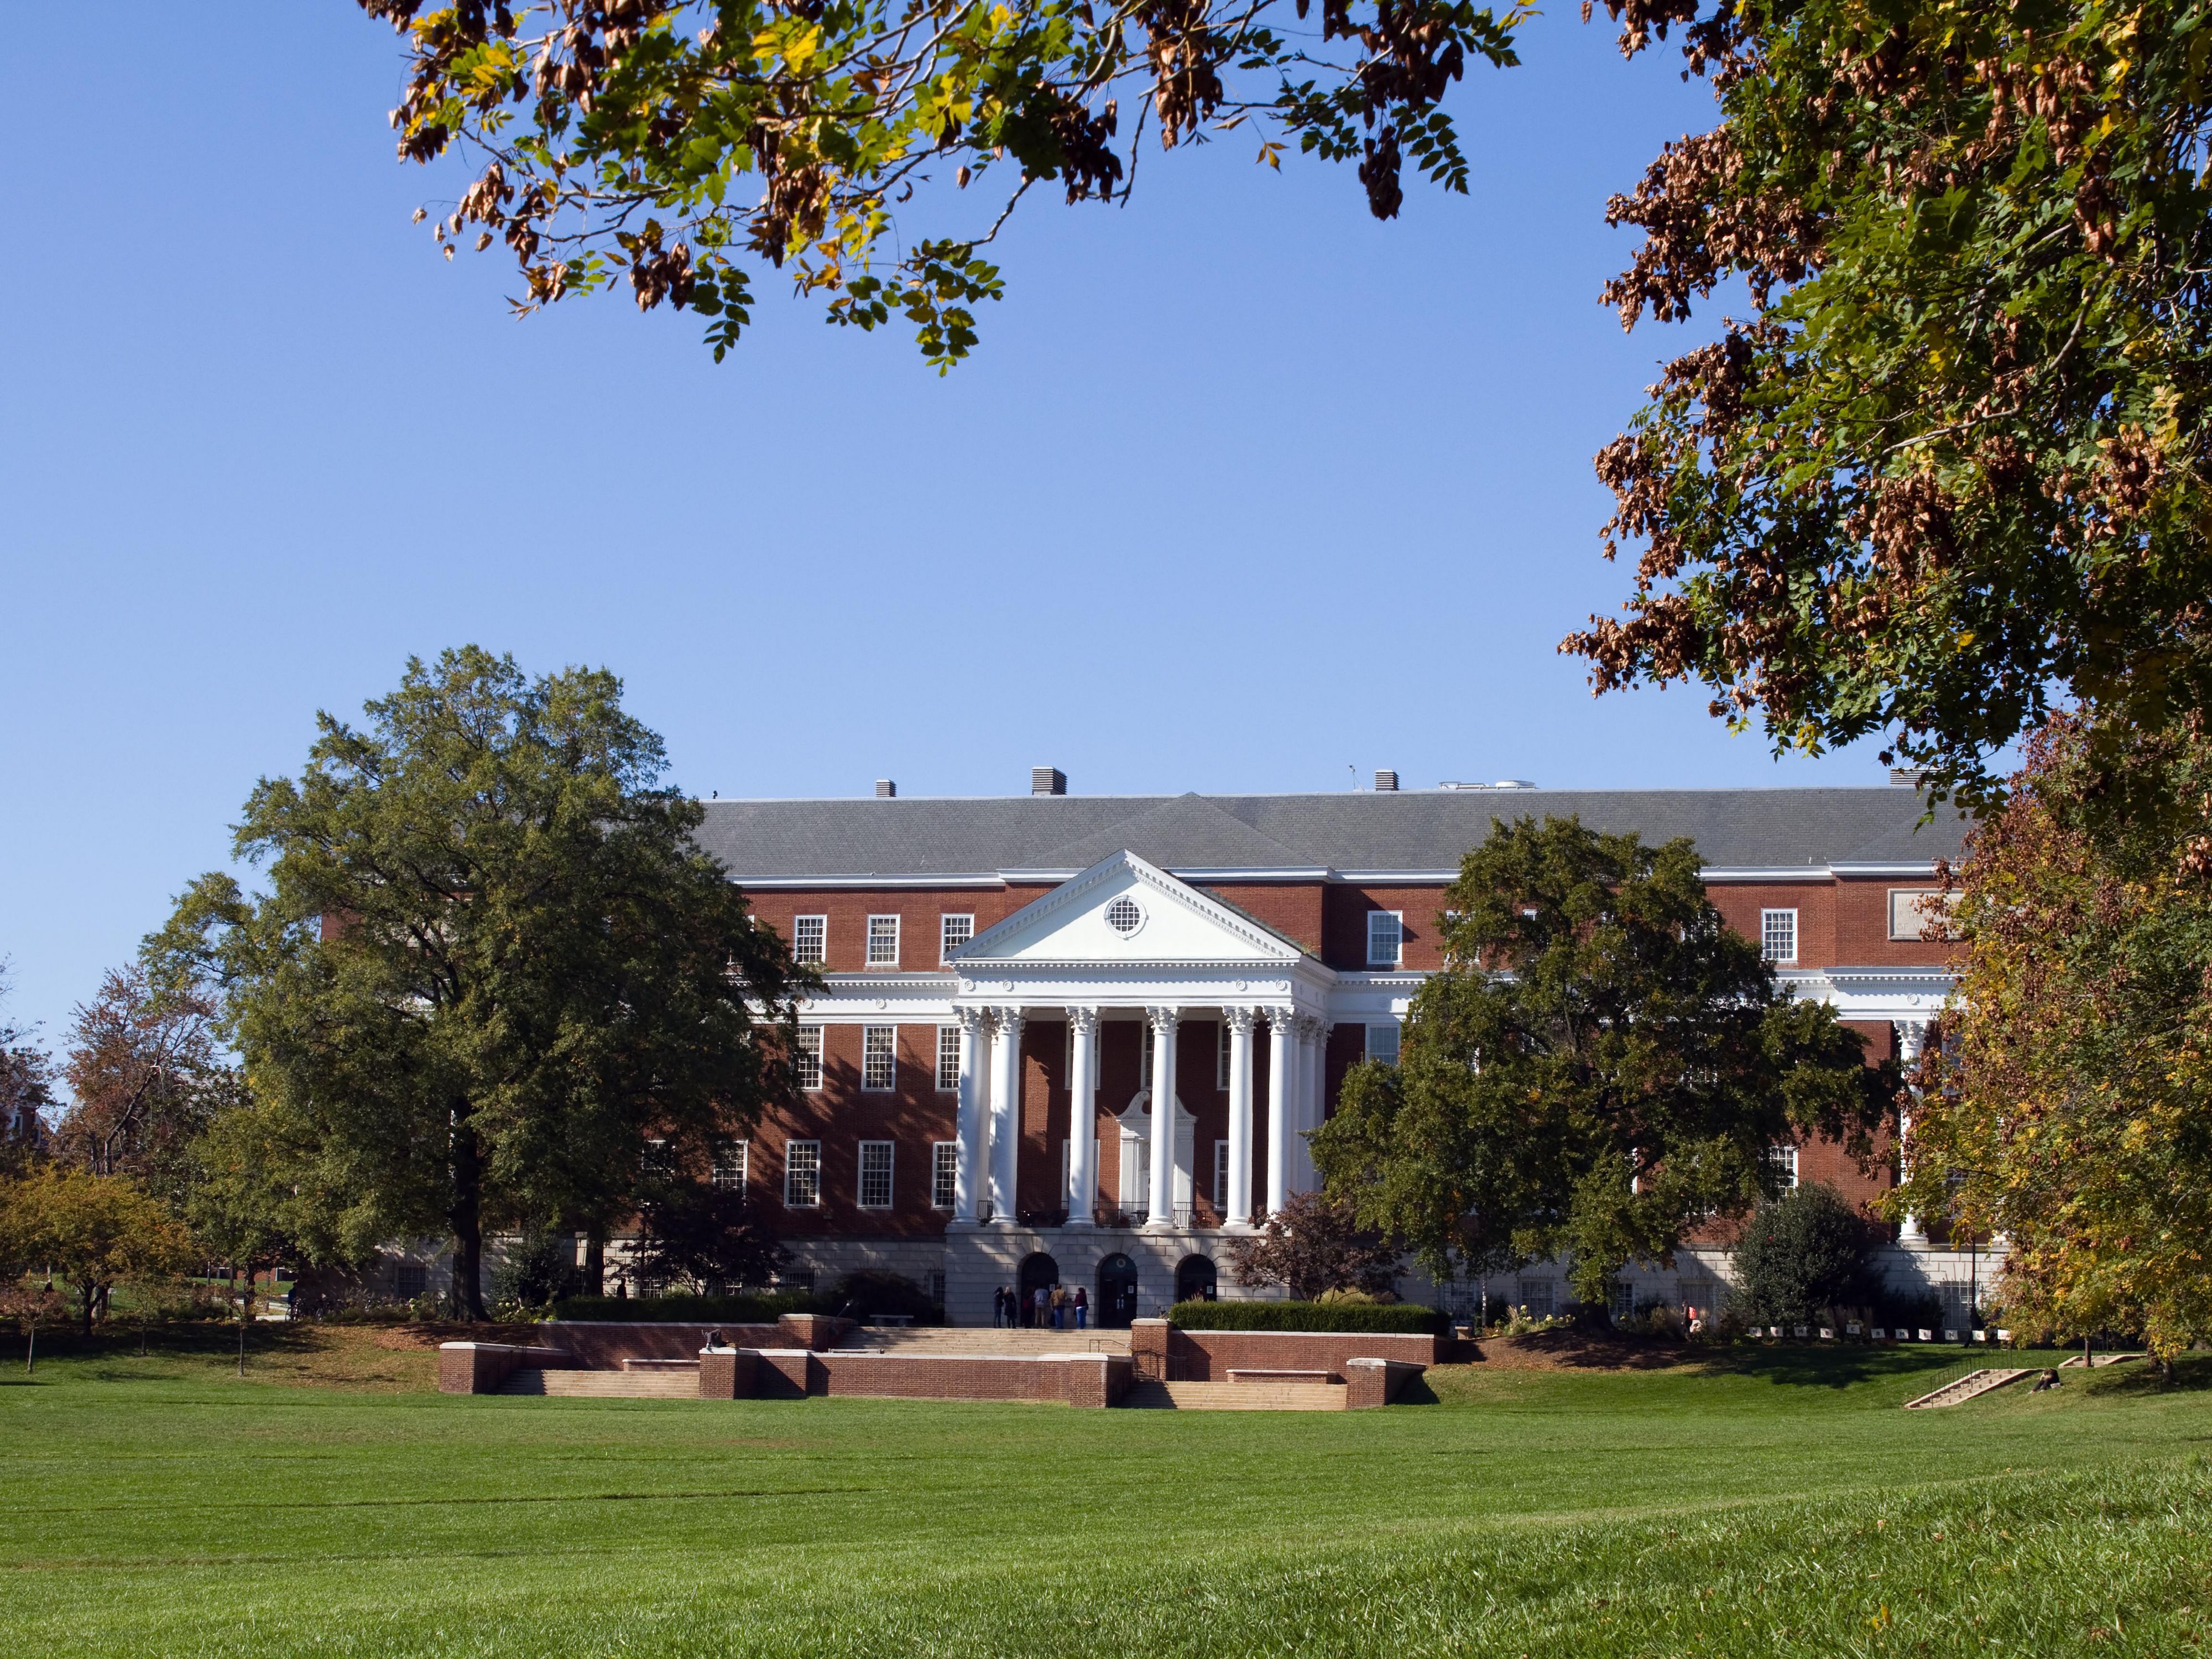 Visit the University of Maryland